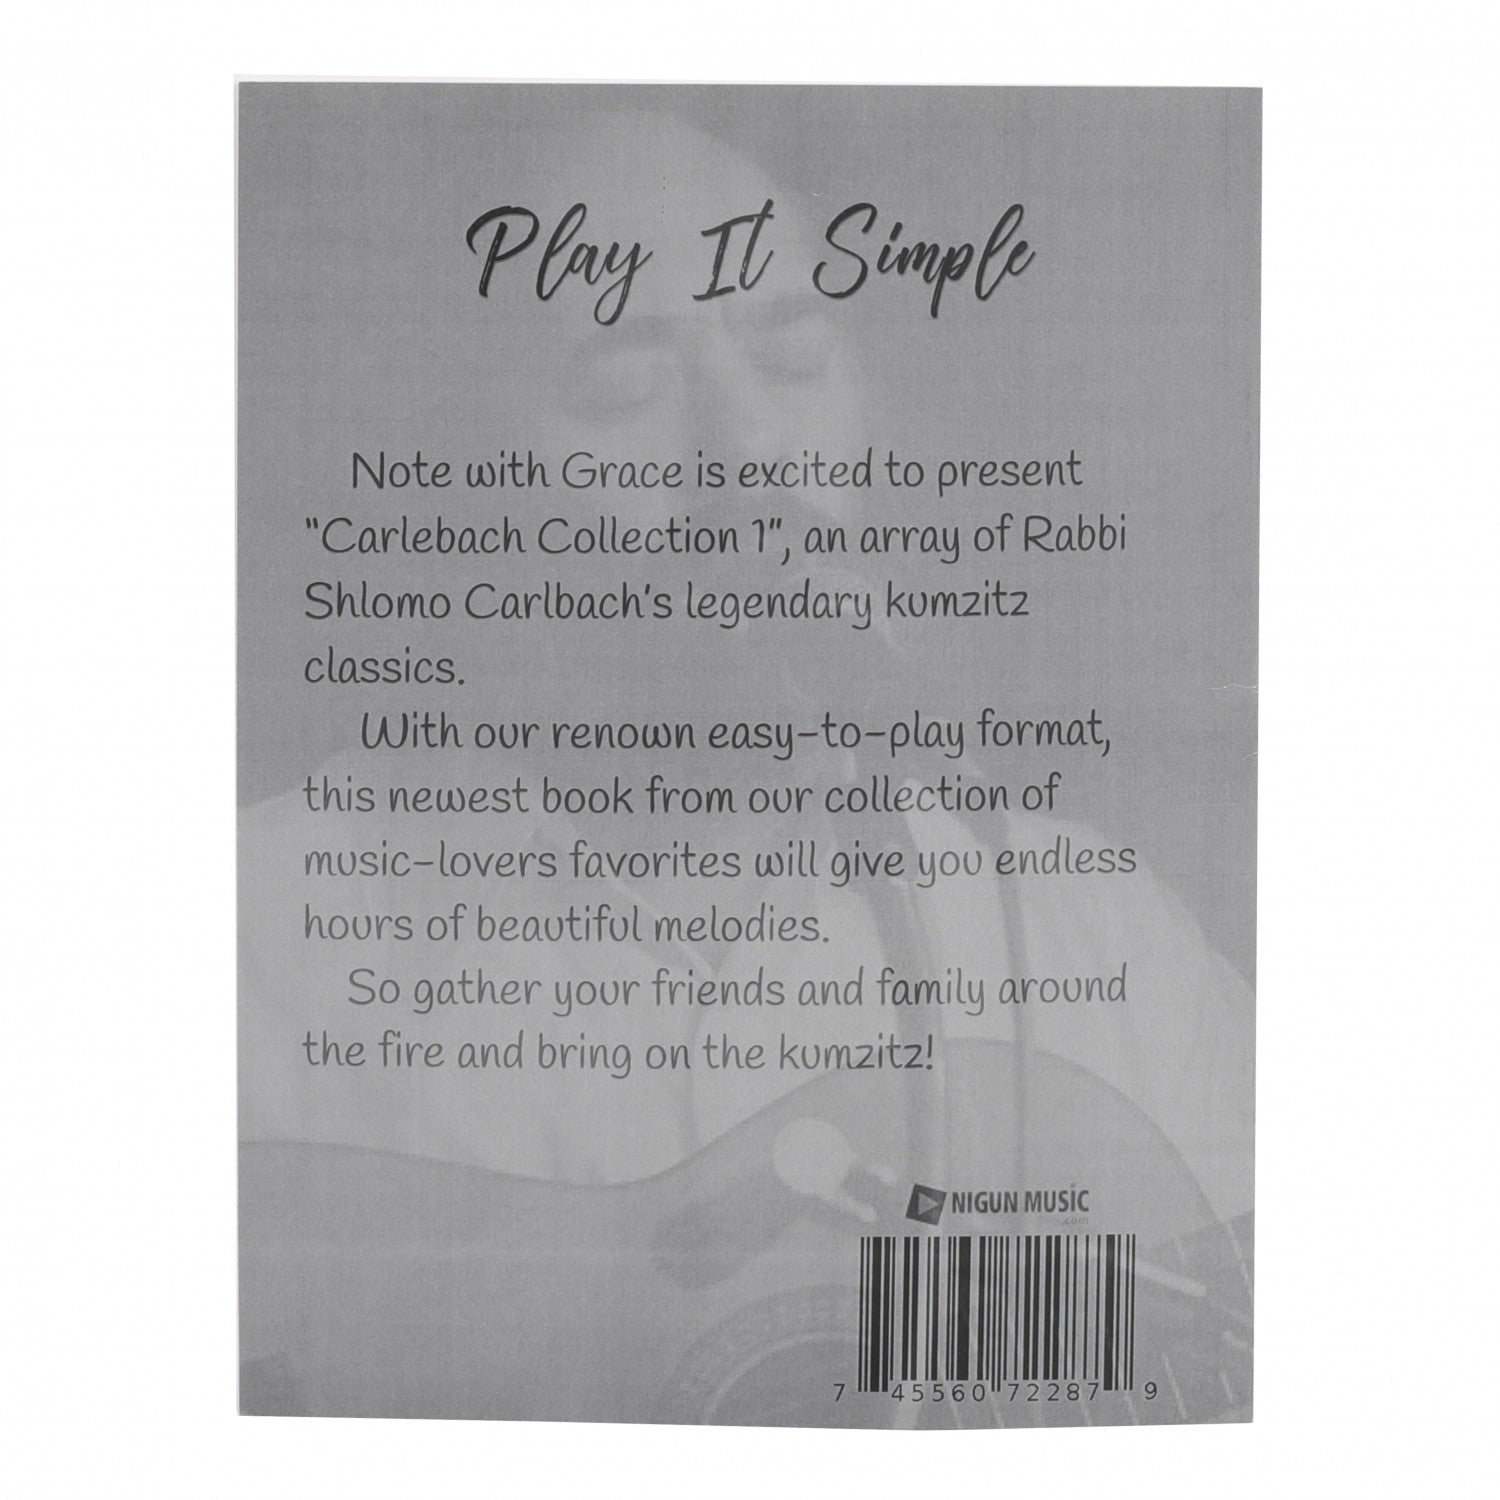 Play It Simple - אוסף קרליבך 1 (ספר)